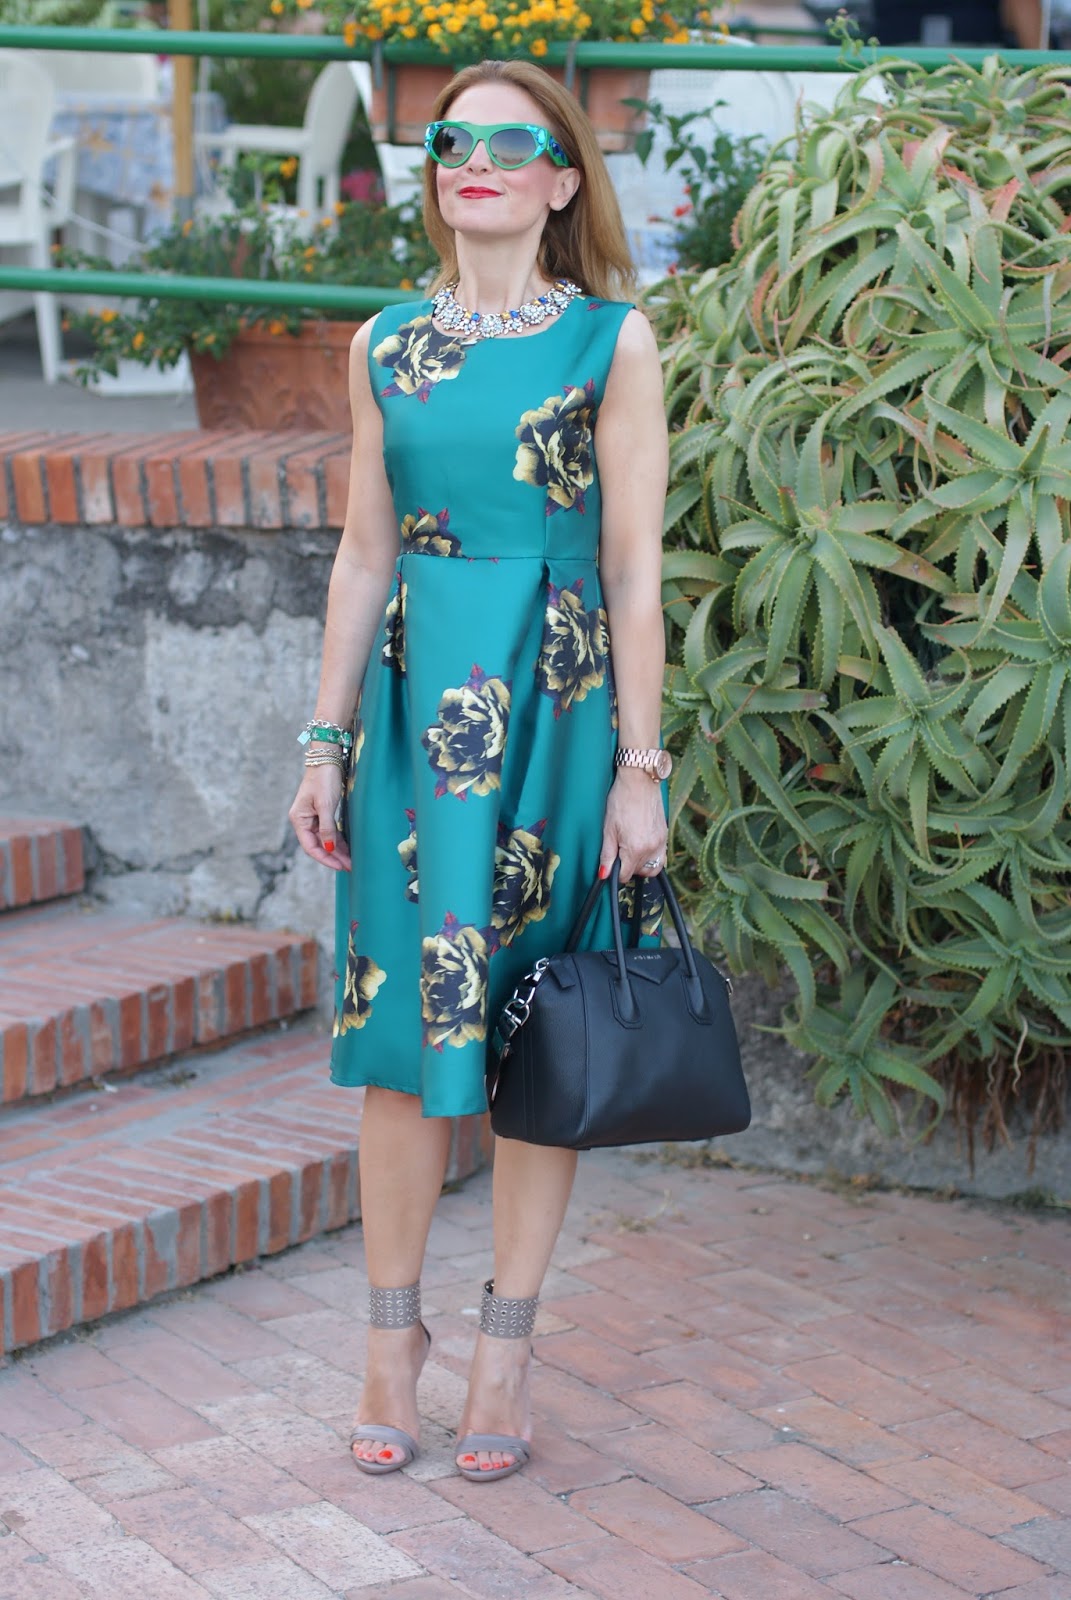 Choies green midi dress, Le Silla sandals and Prada Voice sunglasses found on Giarre on Fashion and Cookies fashion blog, fashion blogger style